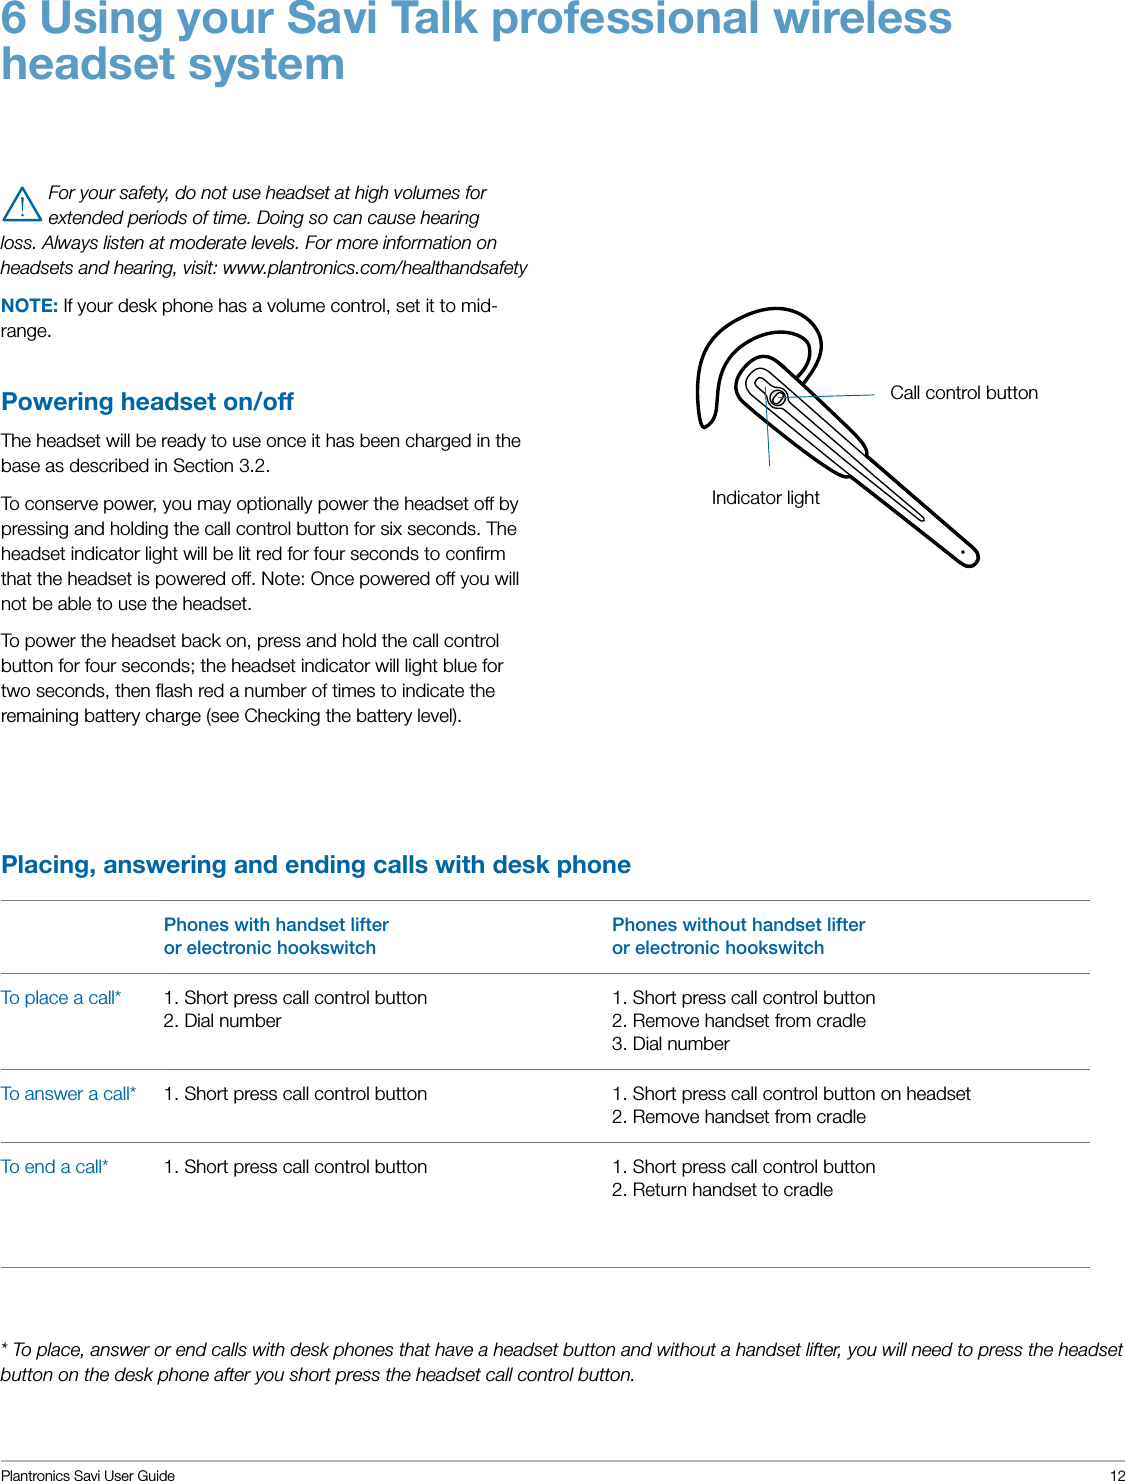 plantronics bluetooth earpiece instructions